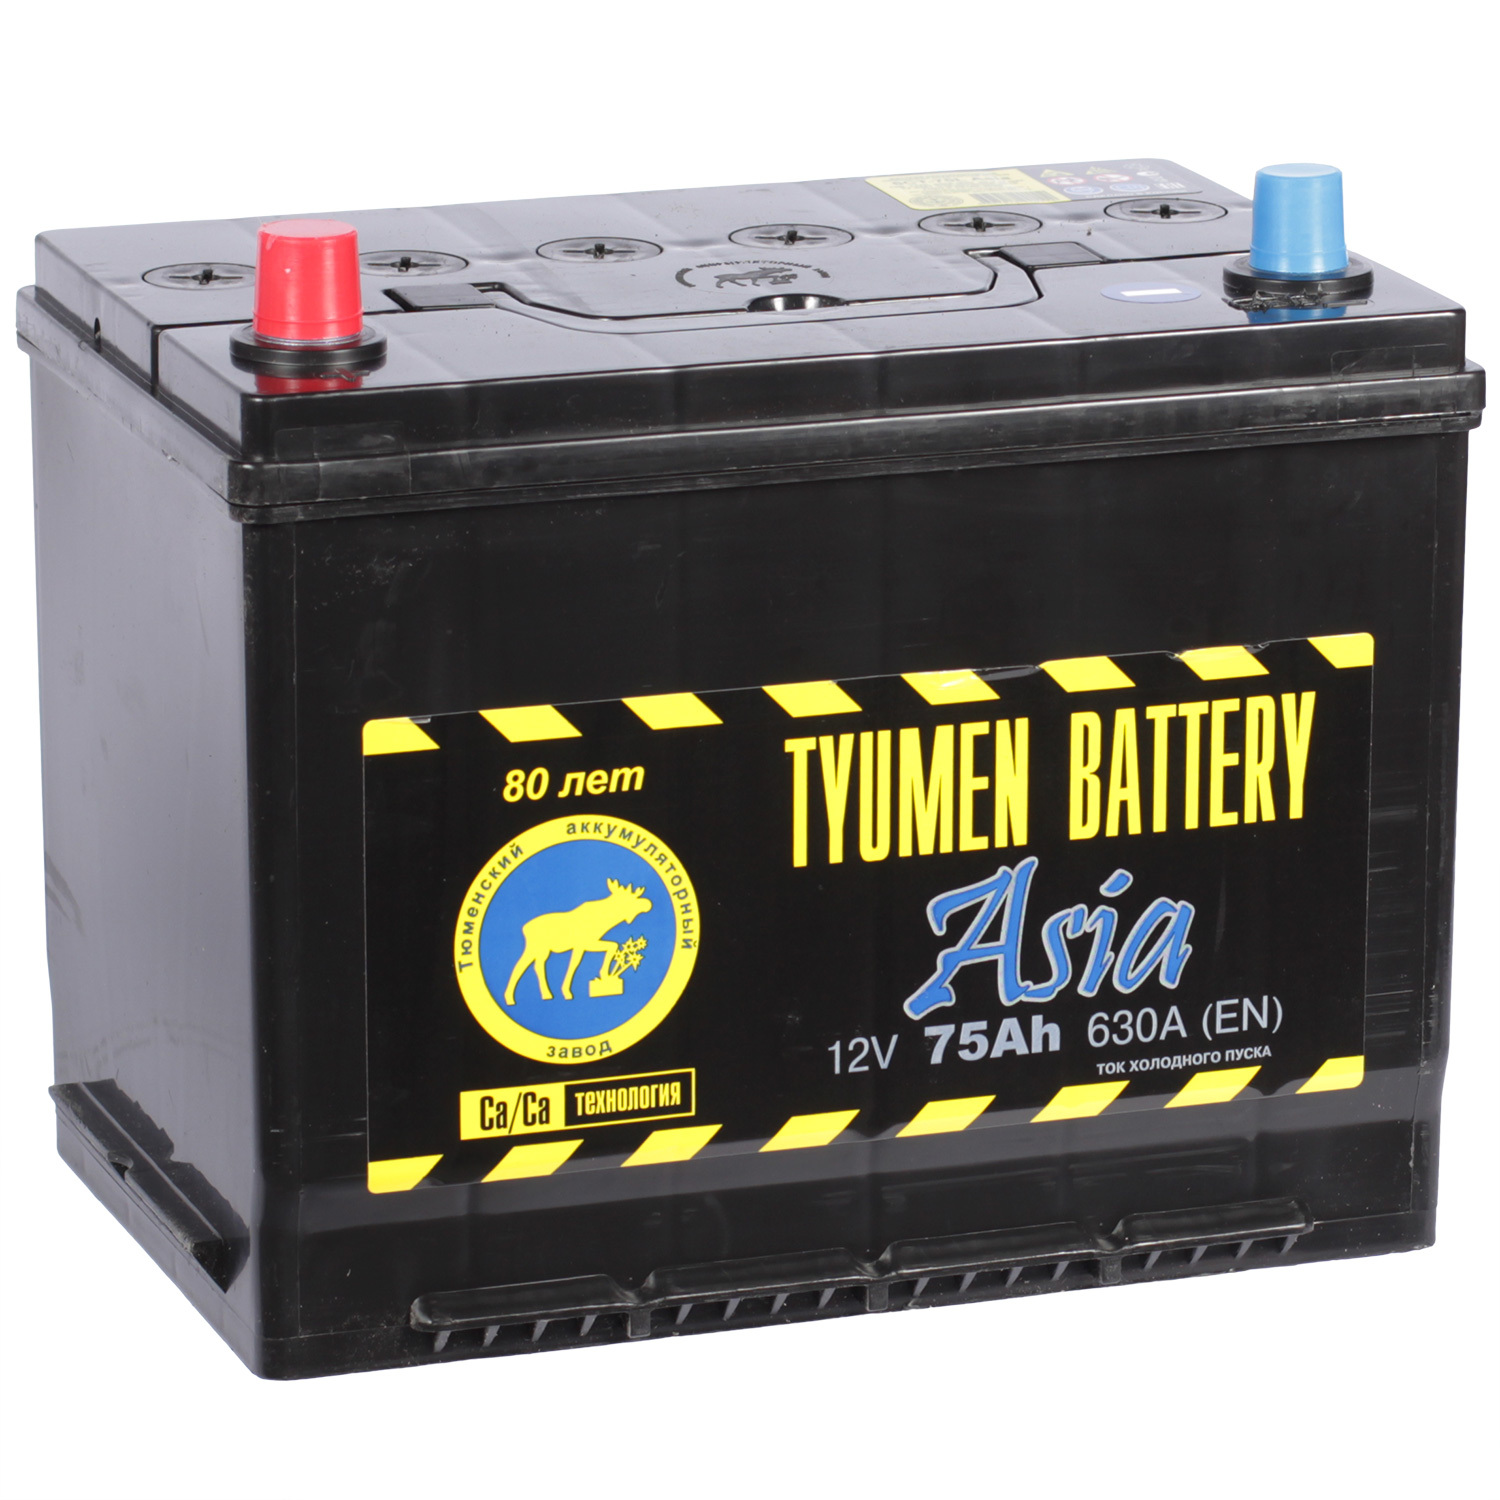 Tyumen Battery Автомобильный аккумулятор Tyumen Battery Asia 75 Ач прямая полярность D26R tyumen battery автомобильный аккумулятор tyumen battery standard 60 ач прямая полярность l2